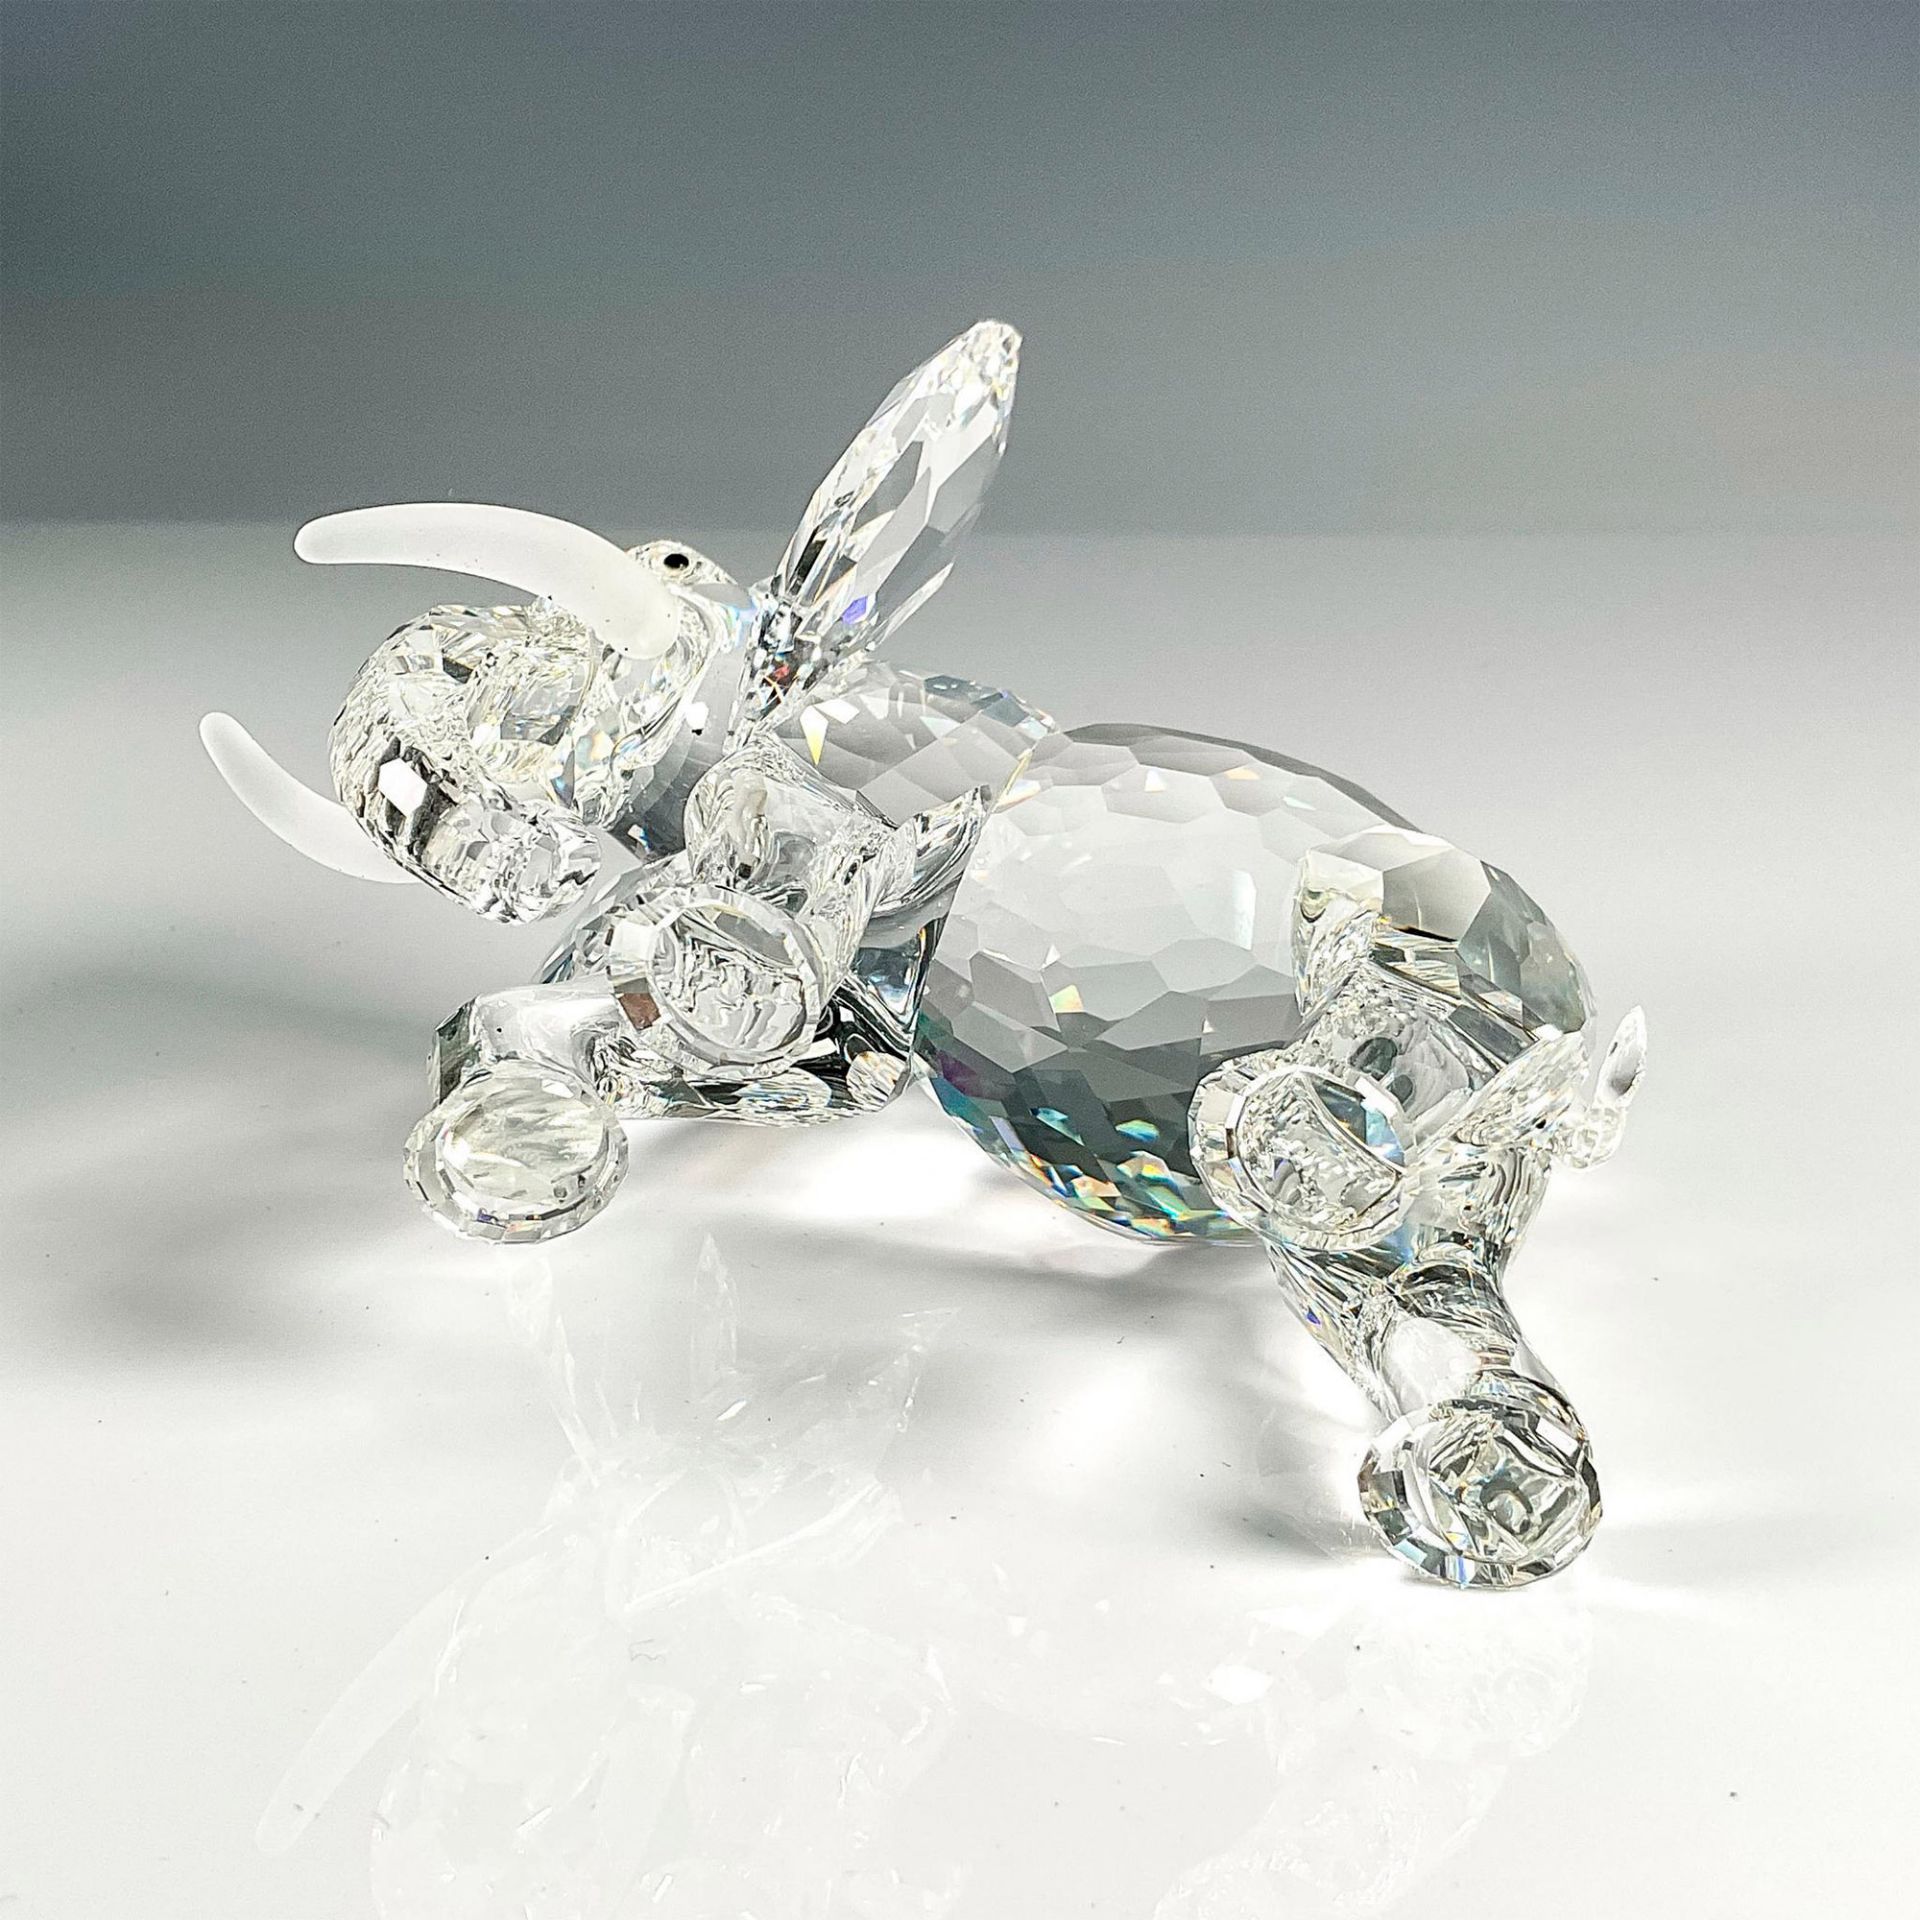 Swarovski Silver Crystal Figurine, 1993 Inspiration Africa - Image 3 of 4